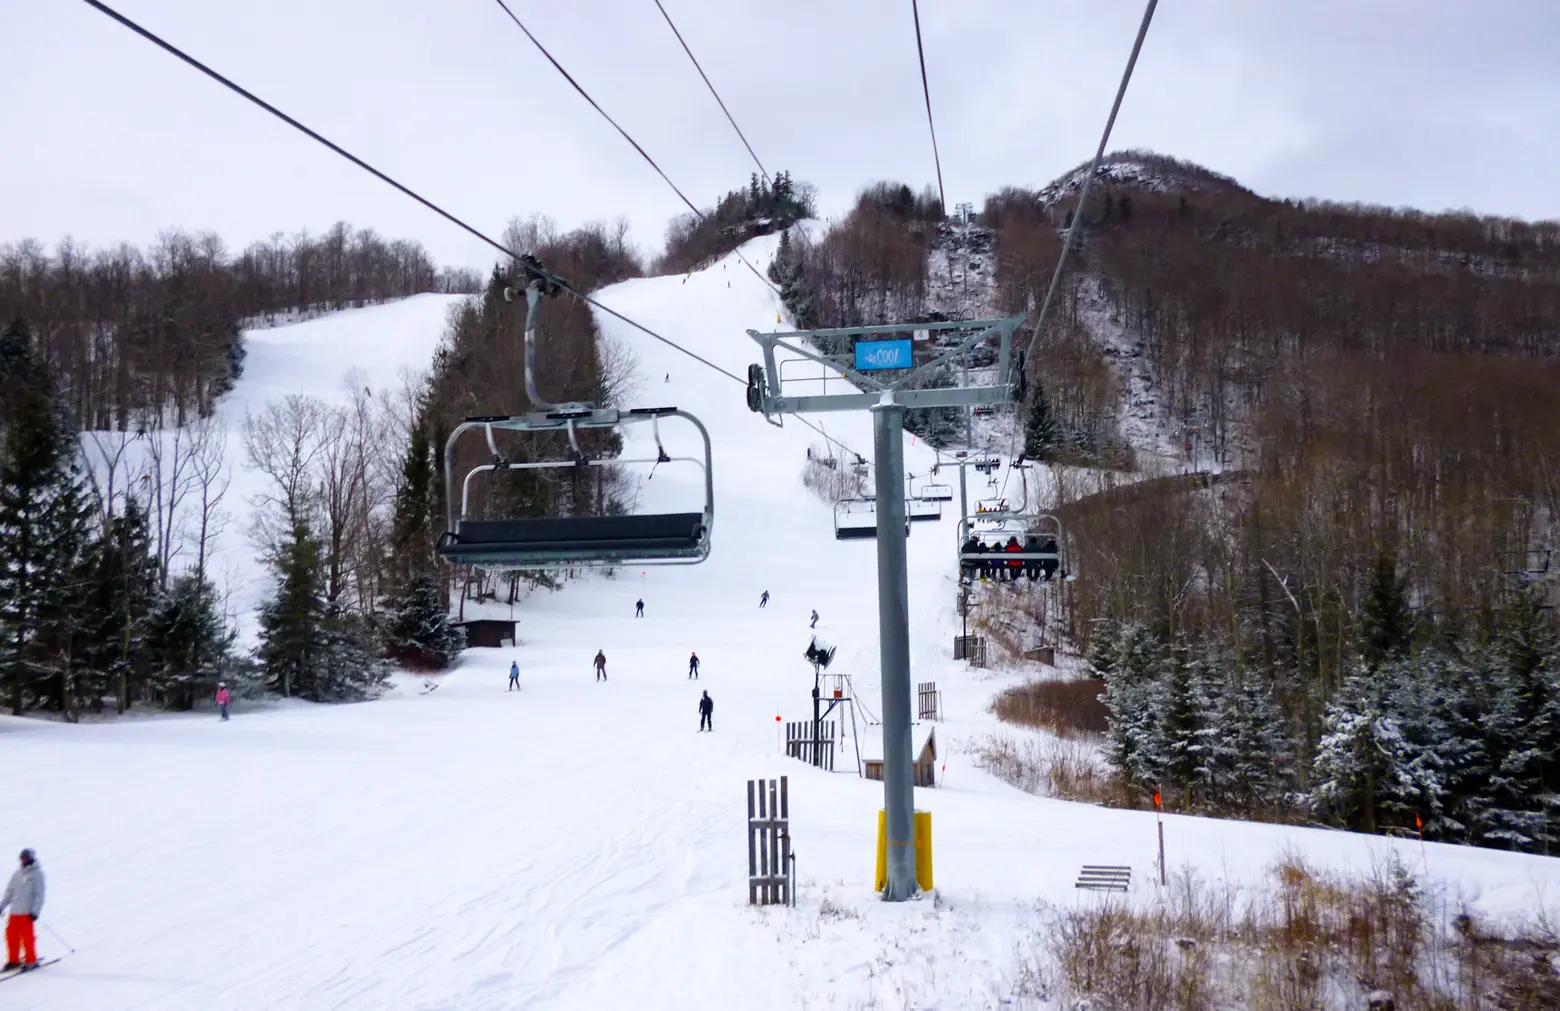 The 5 best ski slopes near New York City